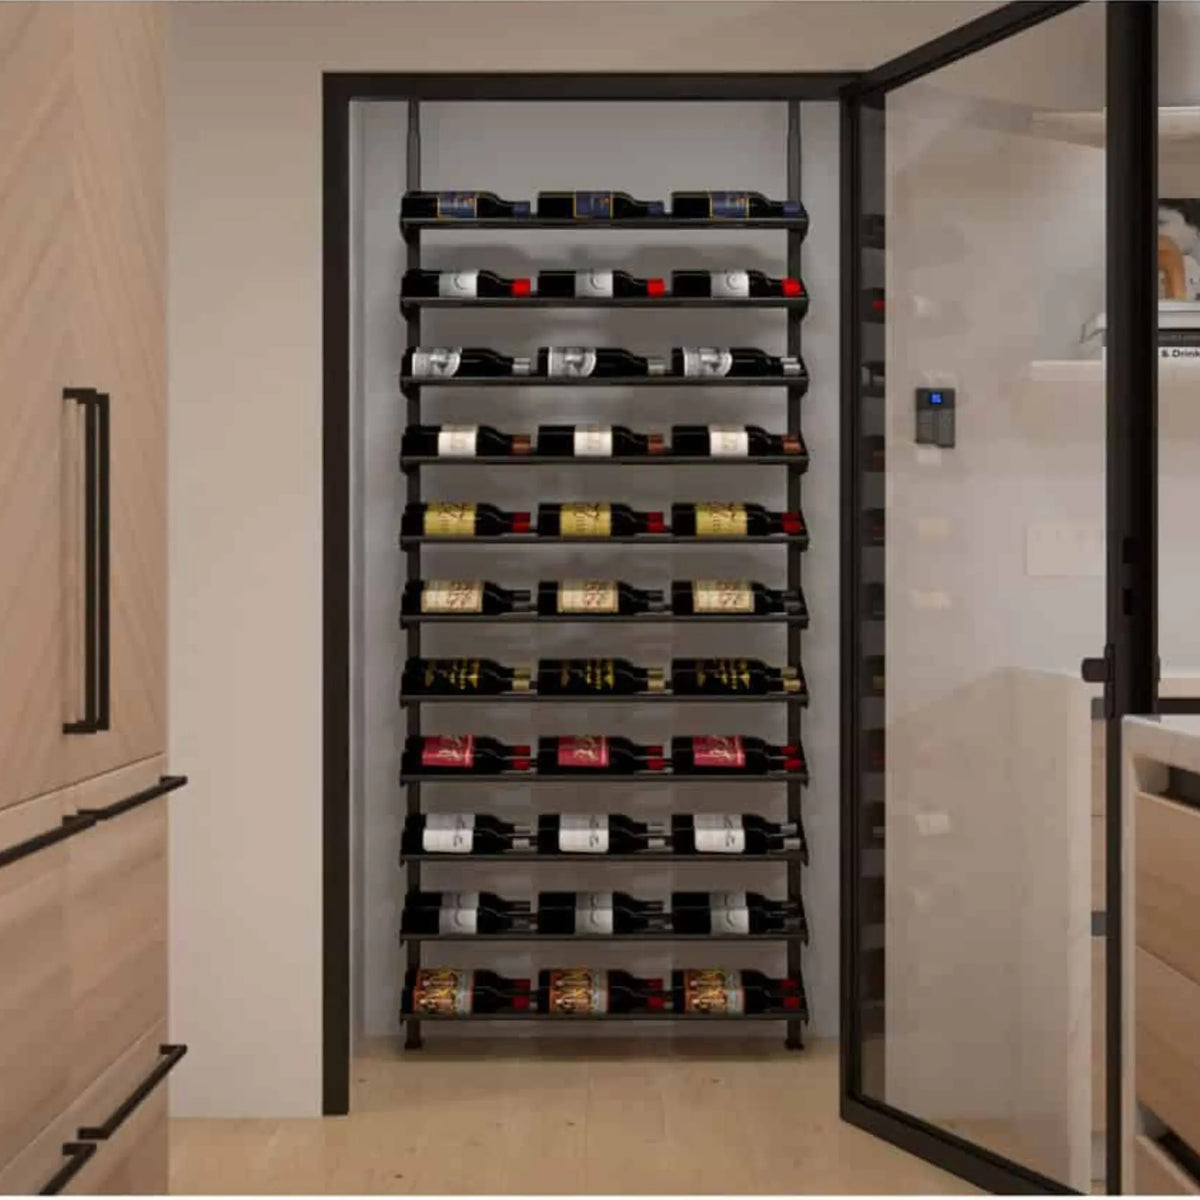 Ultra Wine Racks &amp; Cellars | Showcase Standard Cascade Kits (66-99 Bottles) Ultra Wine Racks &amp; Cellars